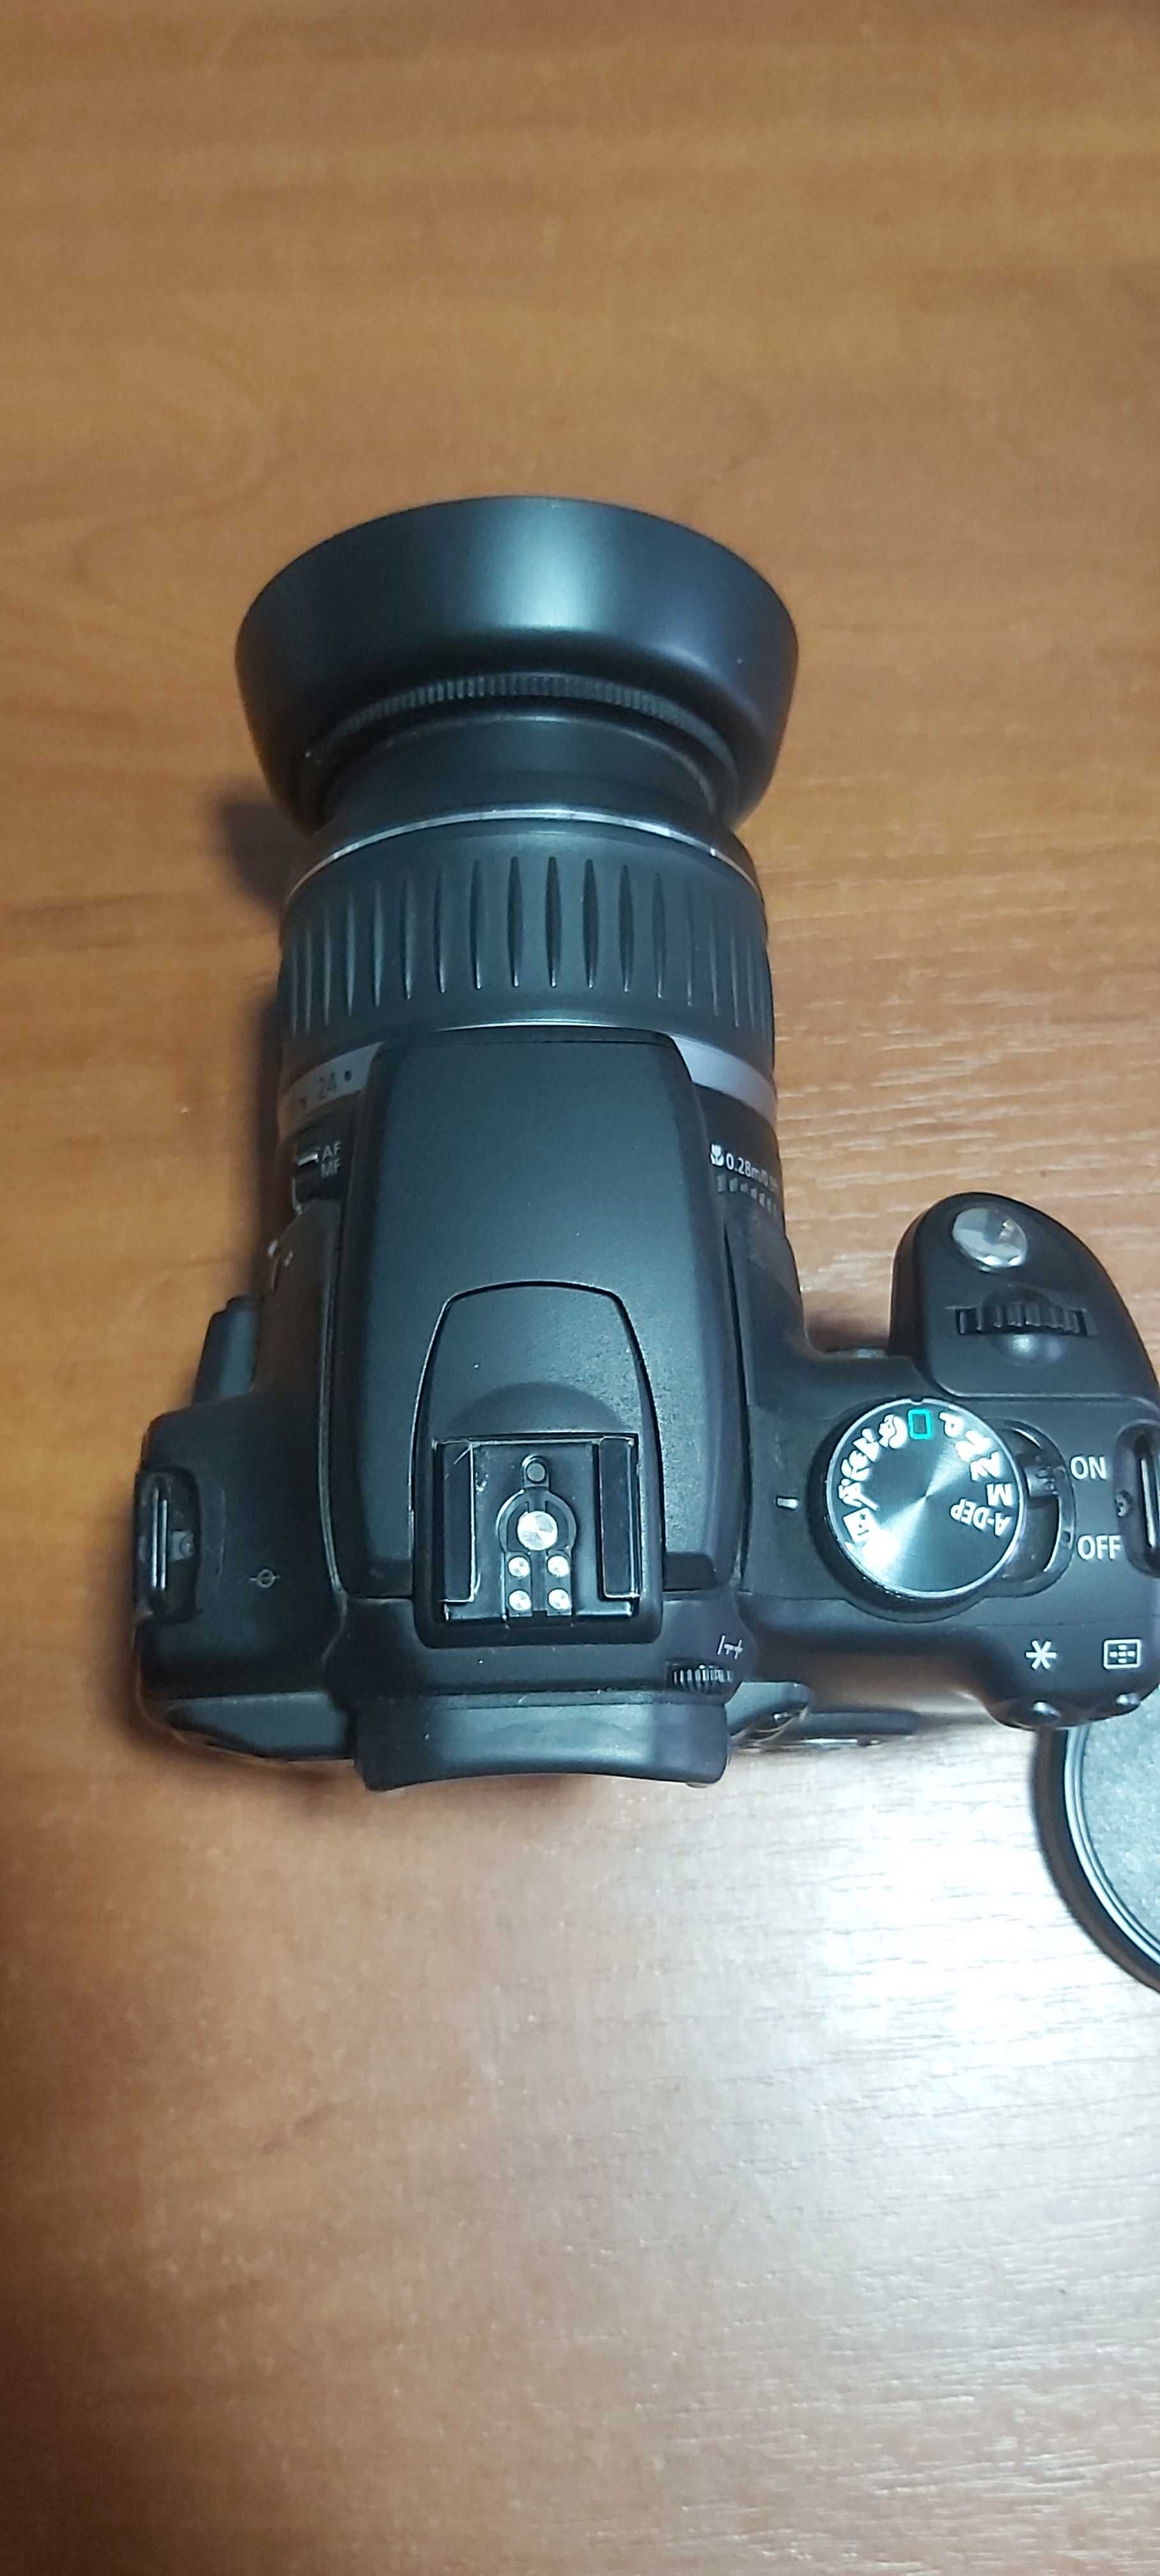 Фотоапарат Canon EOS 350D